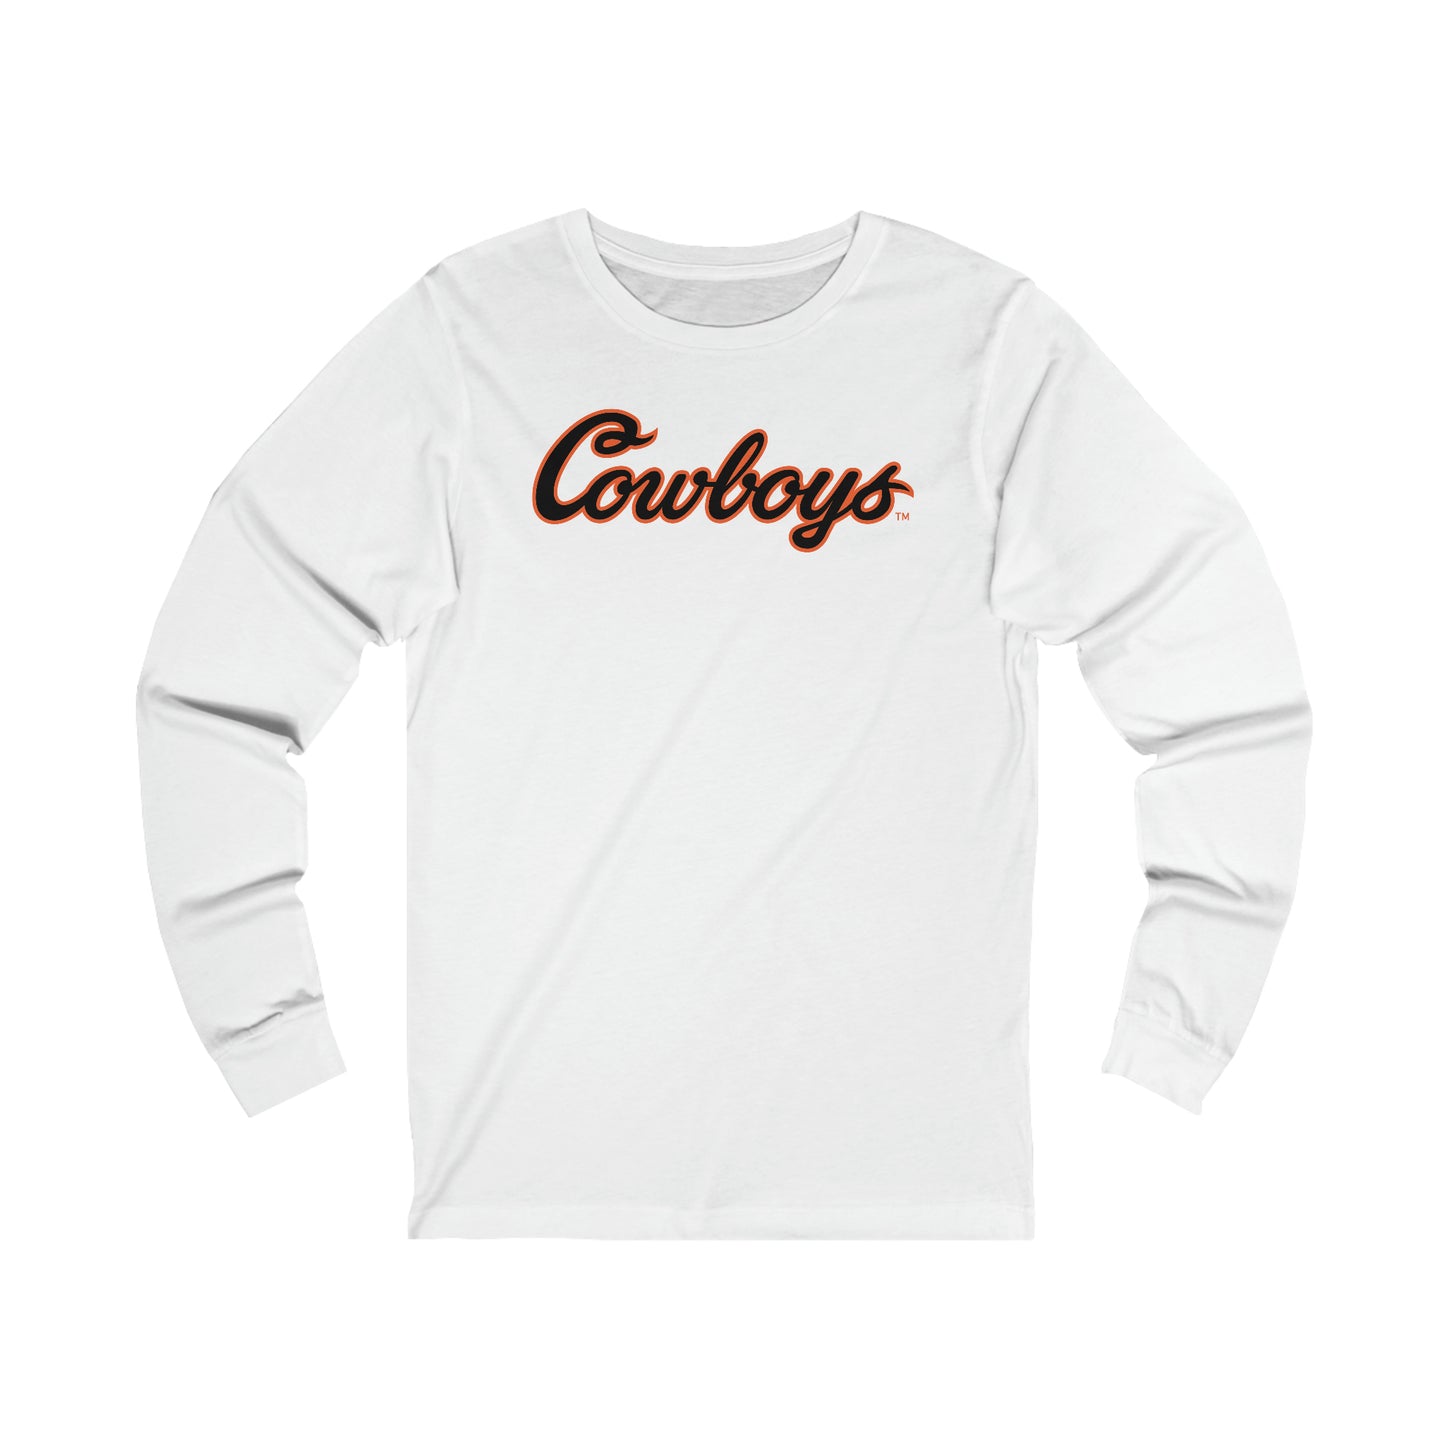 Jamyron Keller #14 Cursive Cowboys Long Sleeve T-Shirt